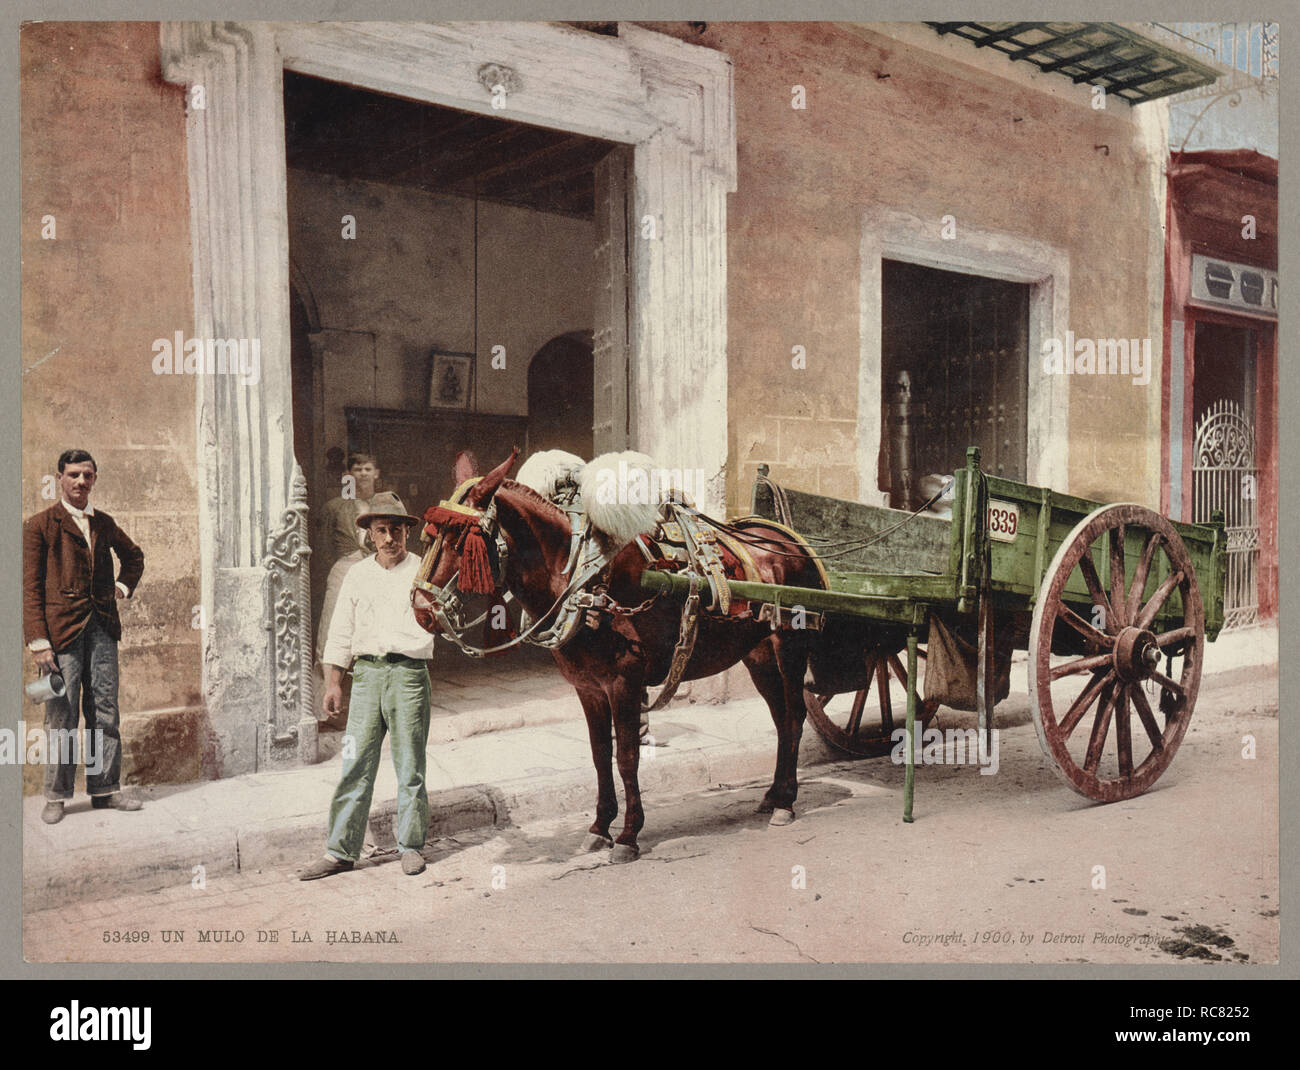 A mule from Havana c.1900 Vintage photochrome postcard reprint.jpg - RC8252 Stock Photo